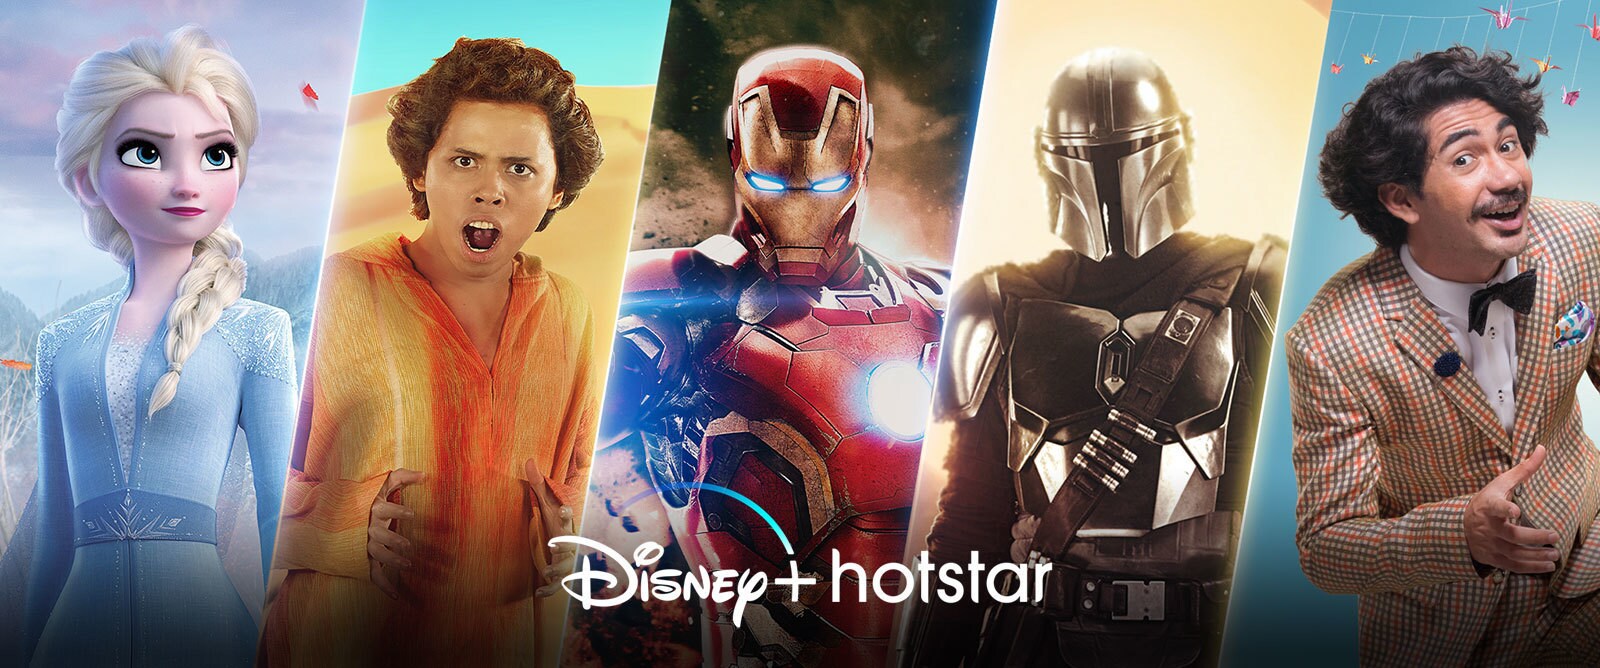 Disney+ Hotstar Landing Page Banner - Ver 2